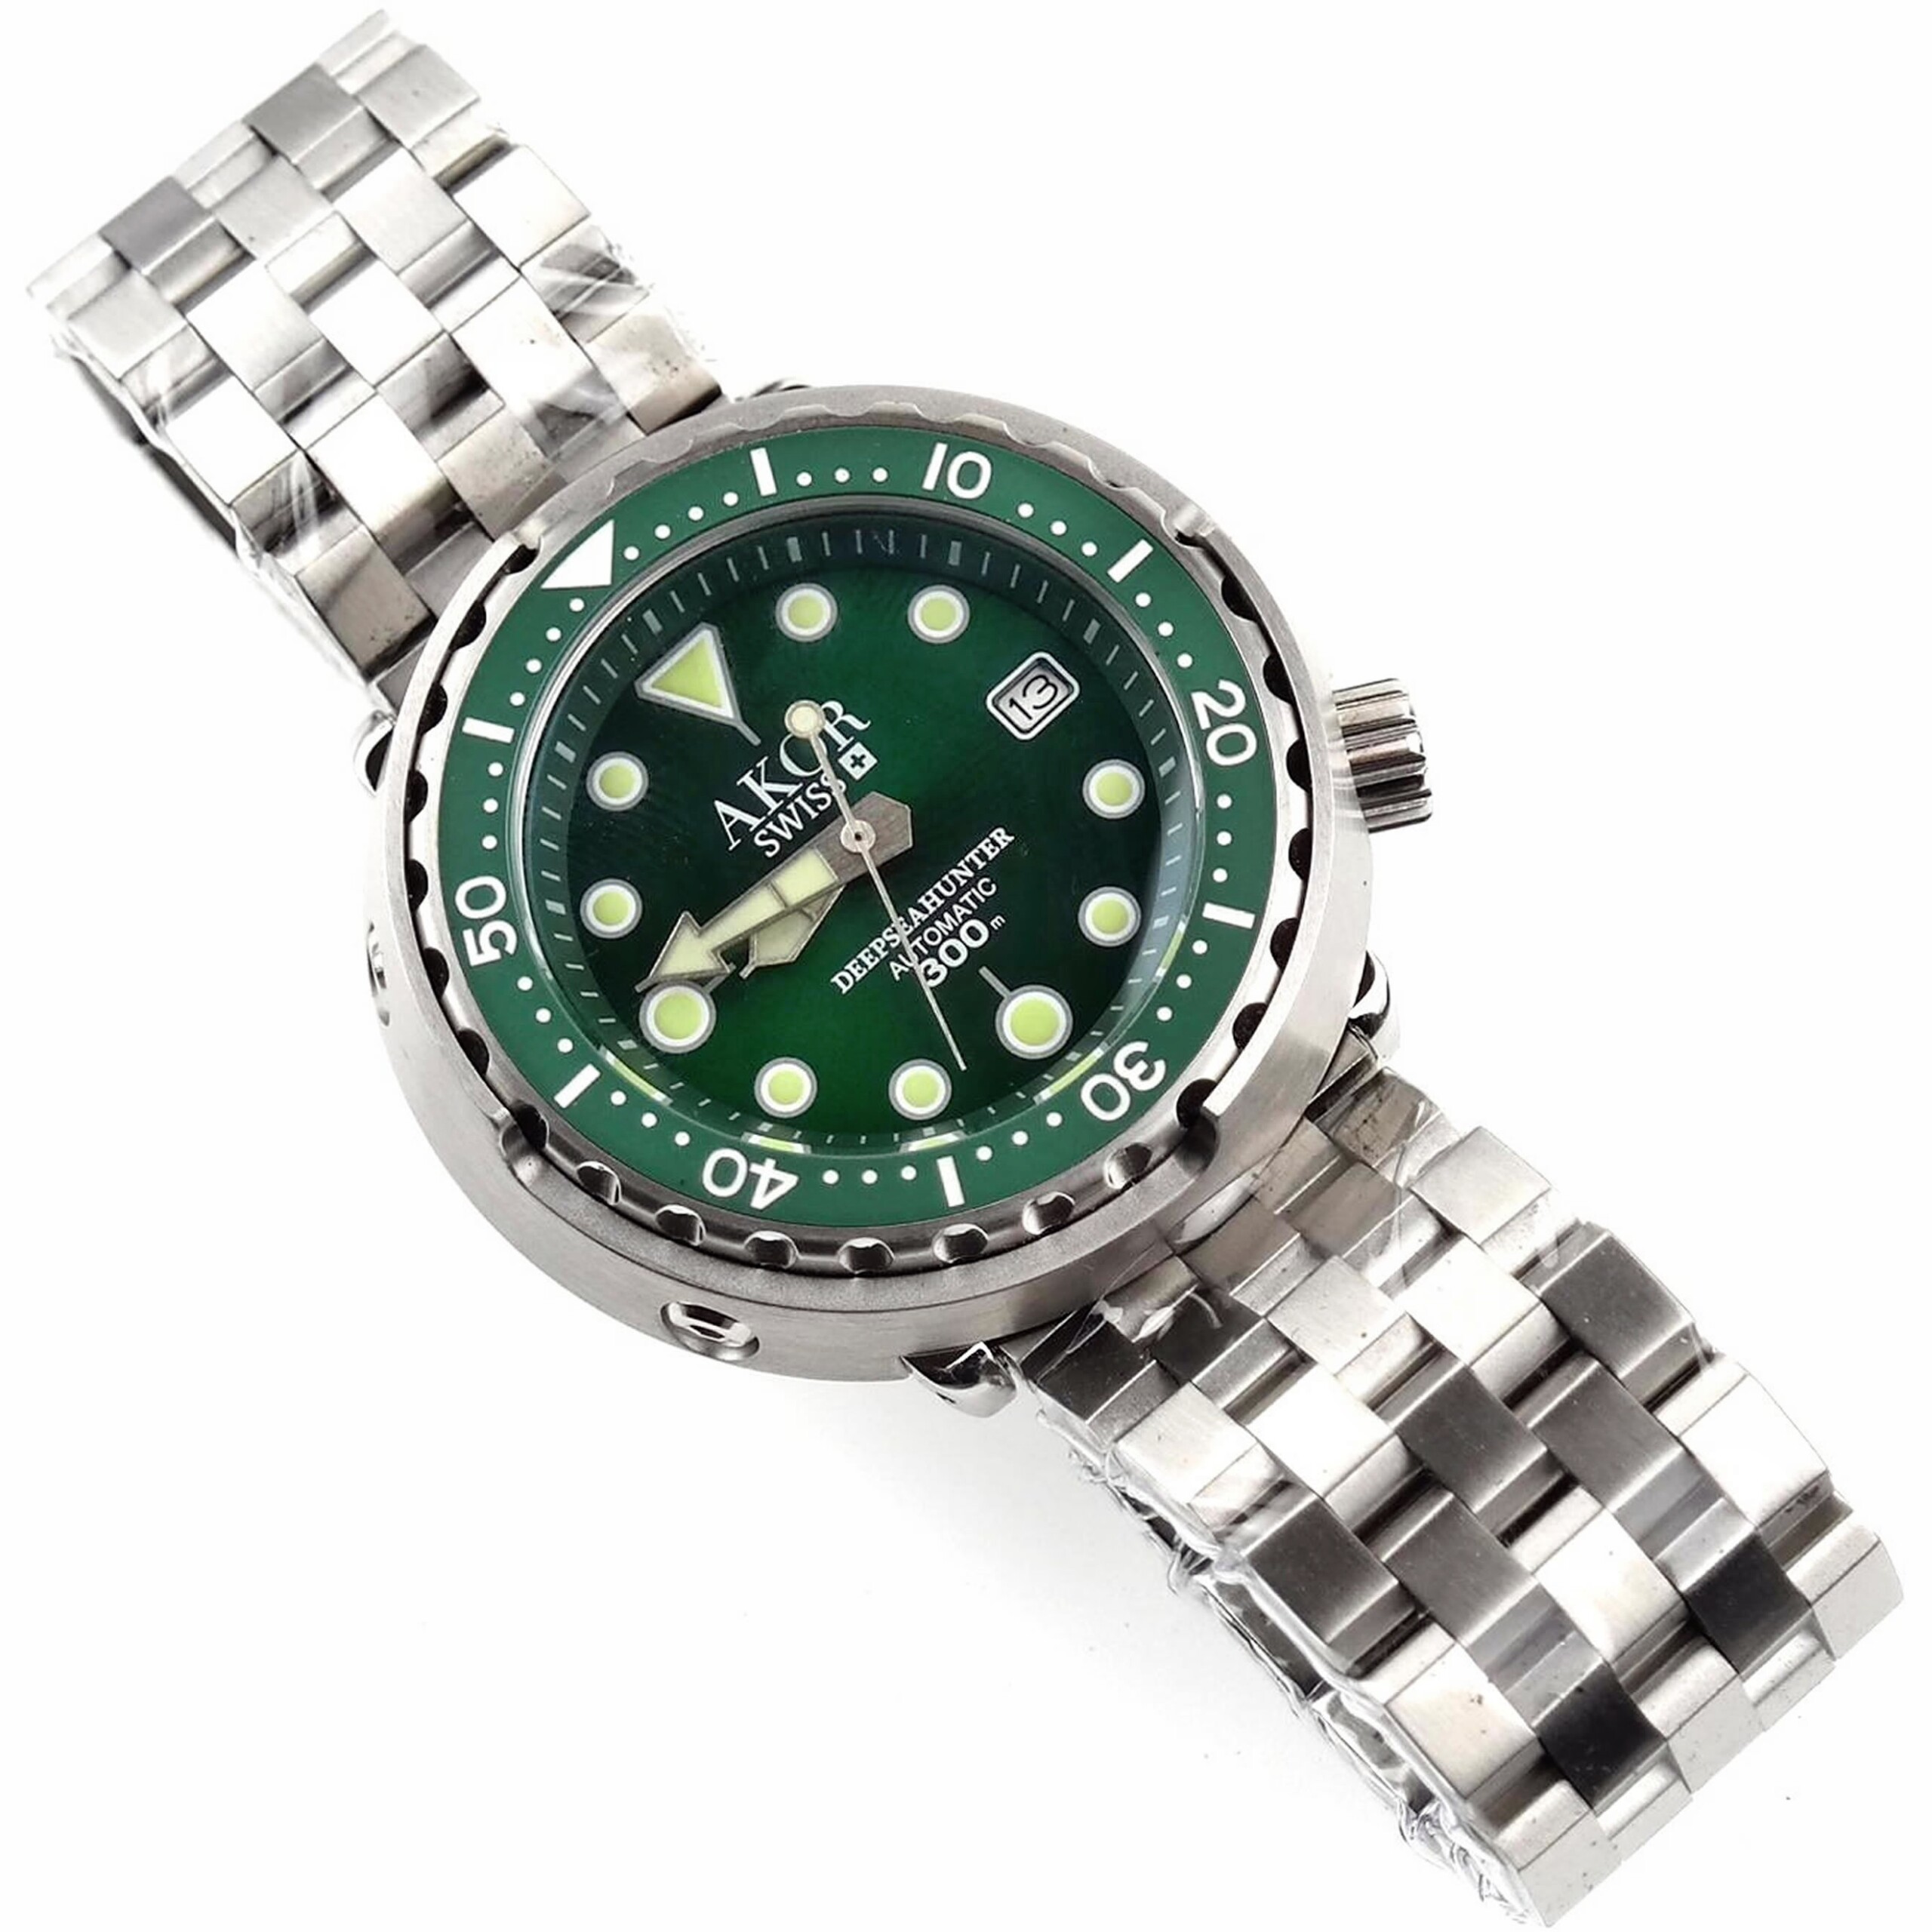 AKOR SWISS - DEEP SEA HUNTER Automatic Watch - Diving 300 M - Emerald Green